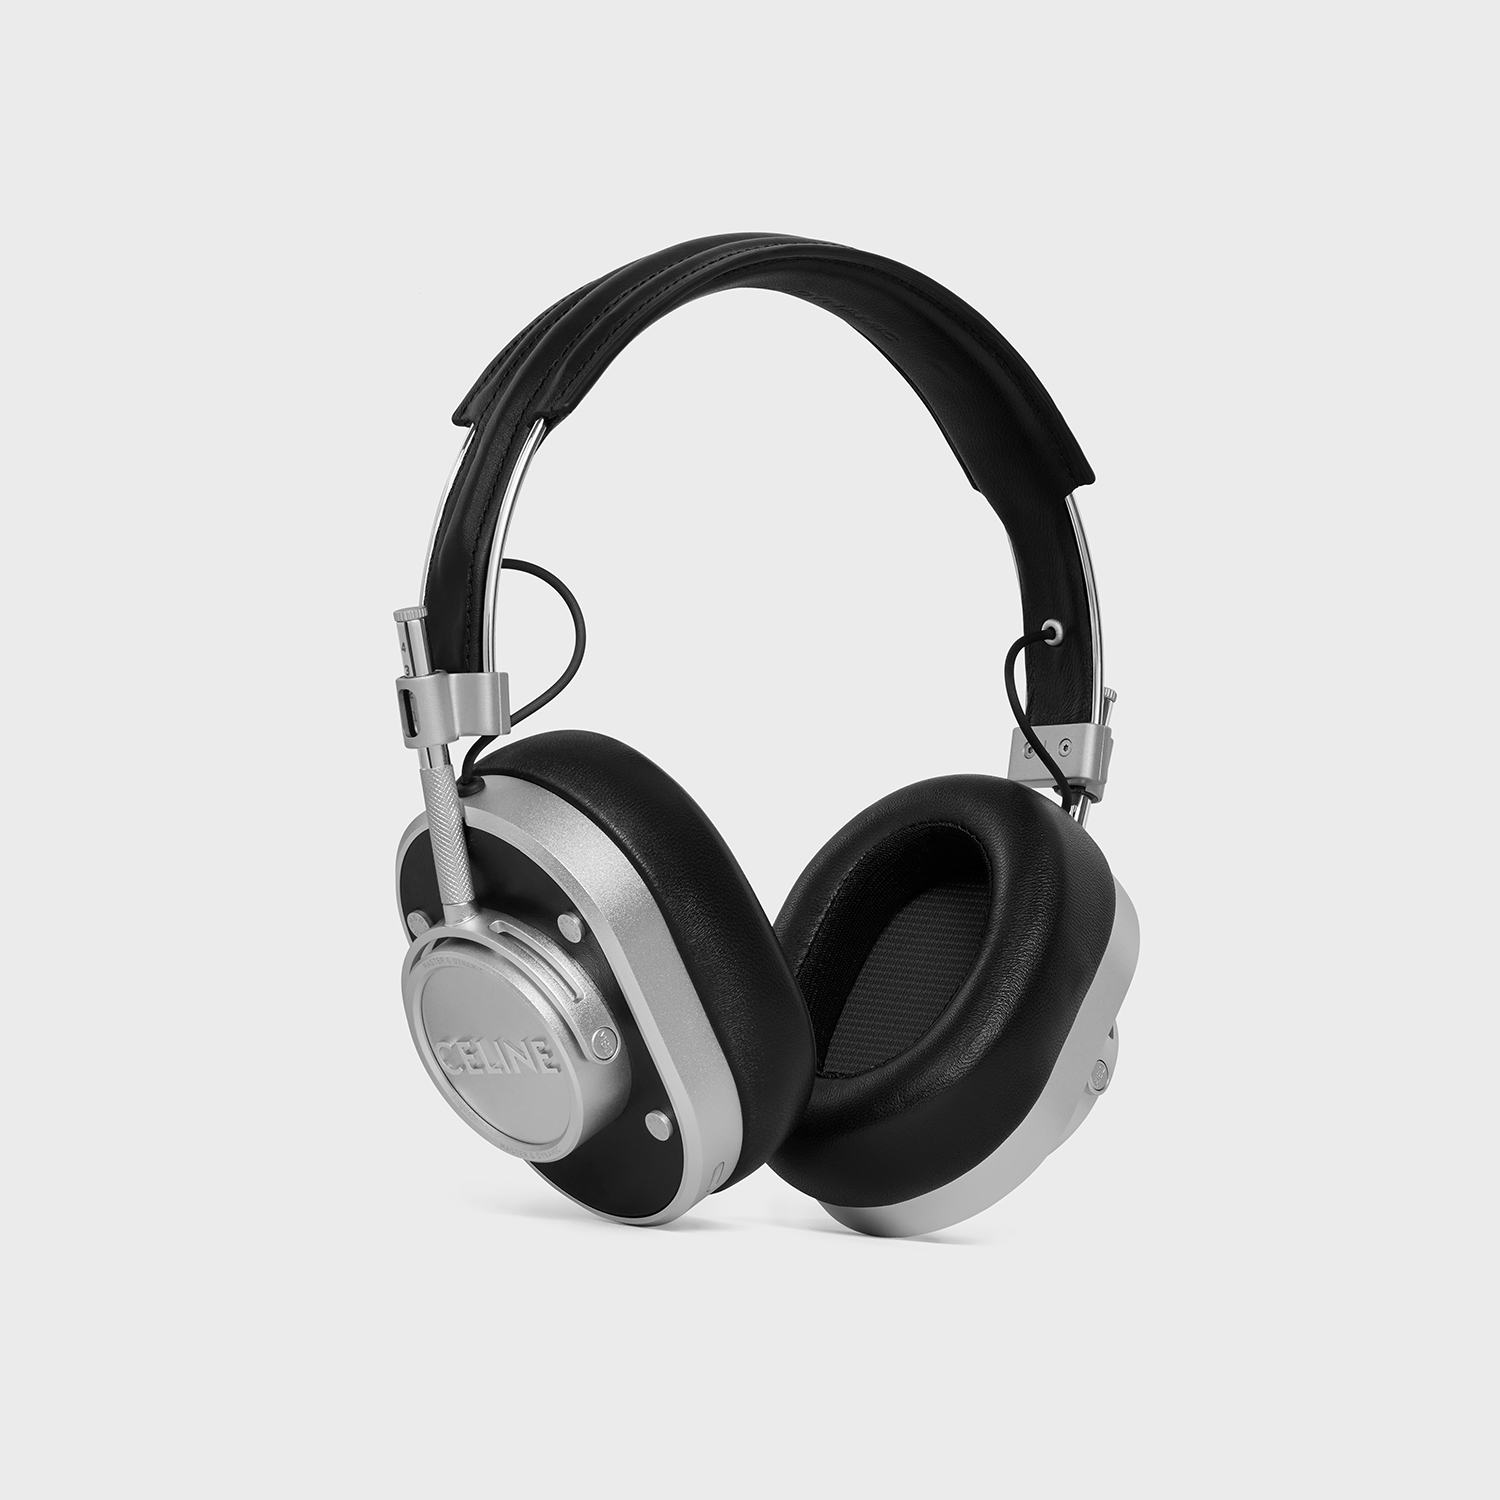 celine-master-dynamic-headphones-release-date-9